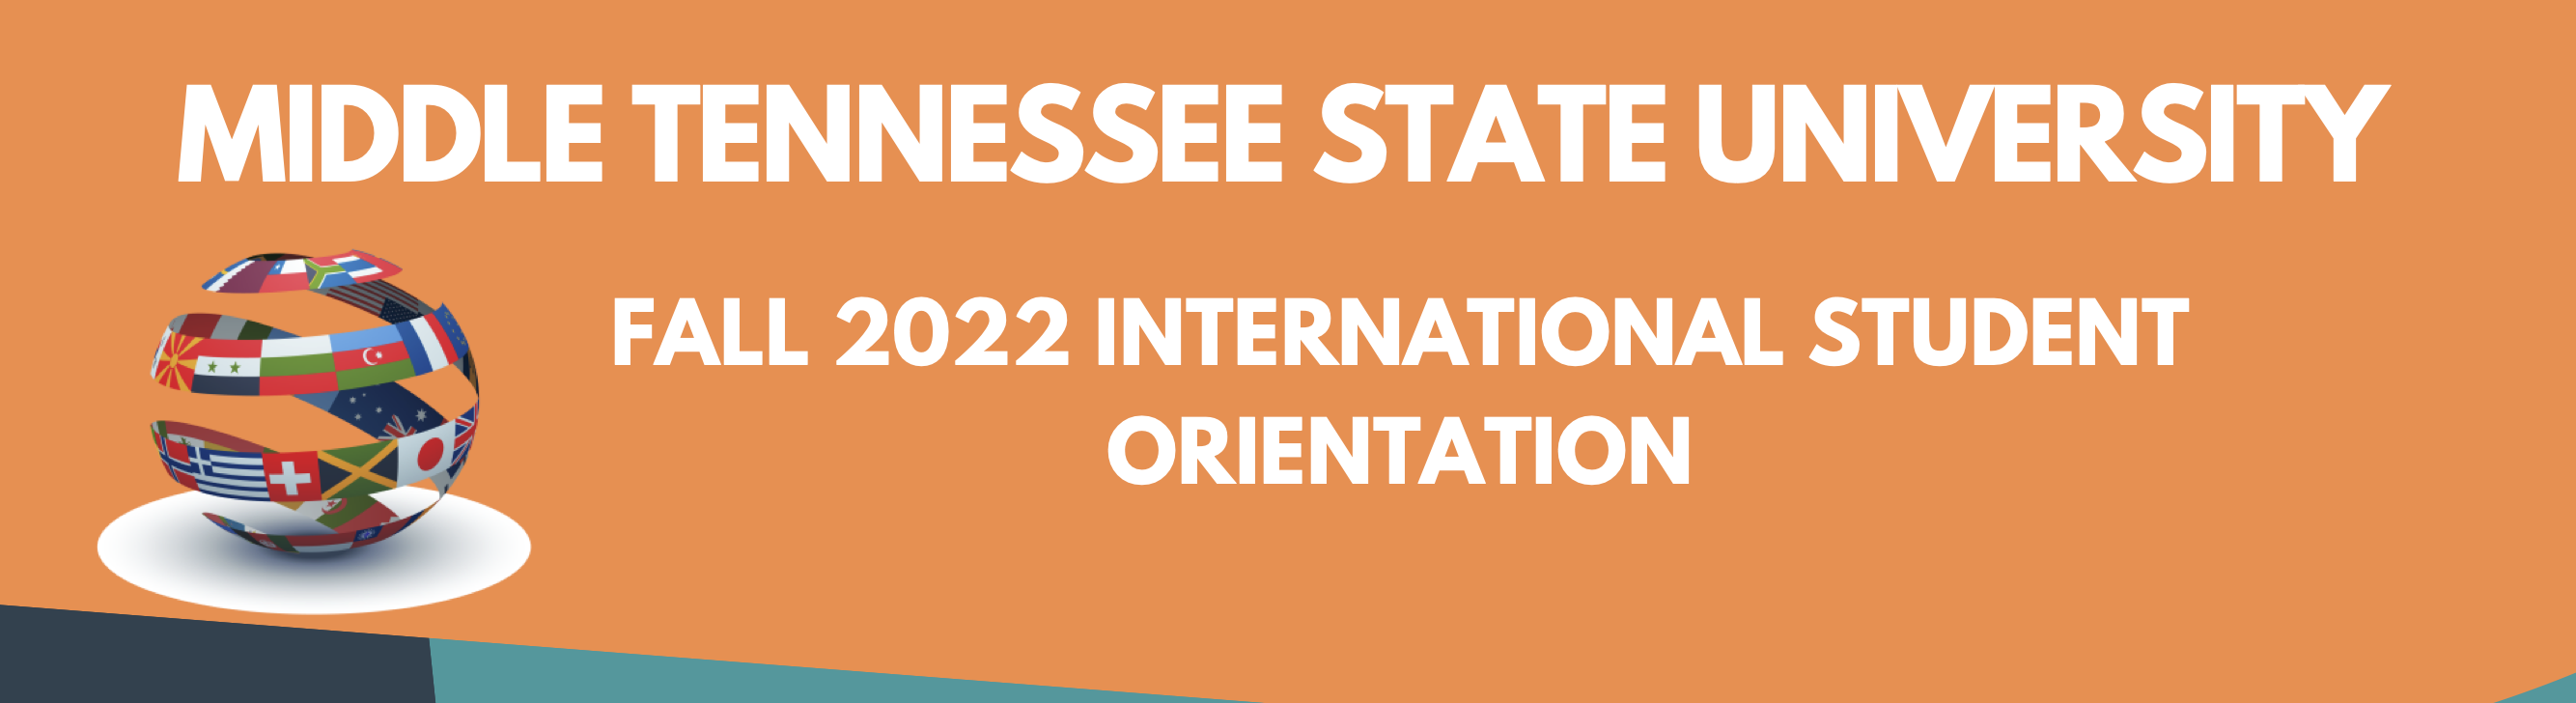 2022 International Student Orientation